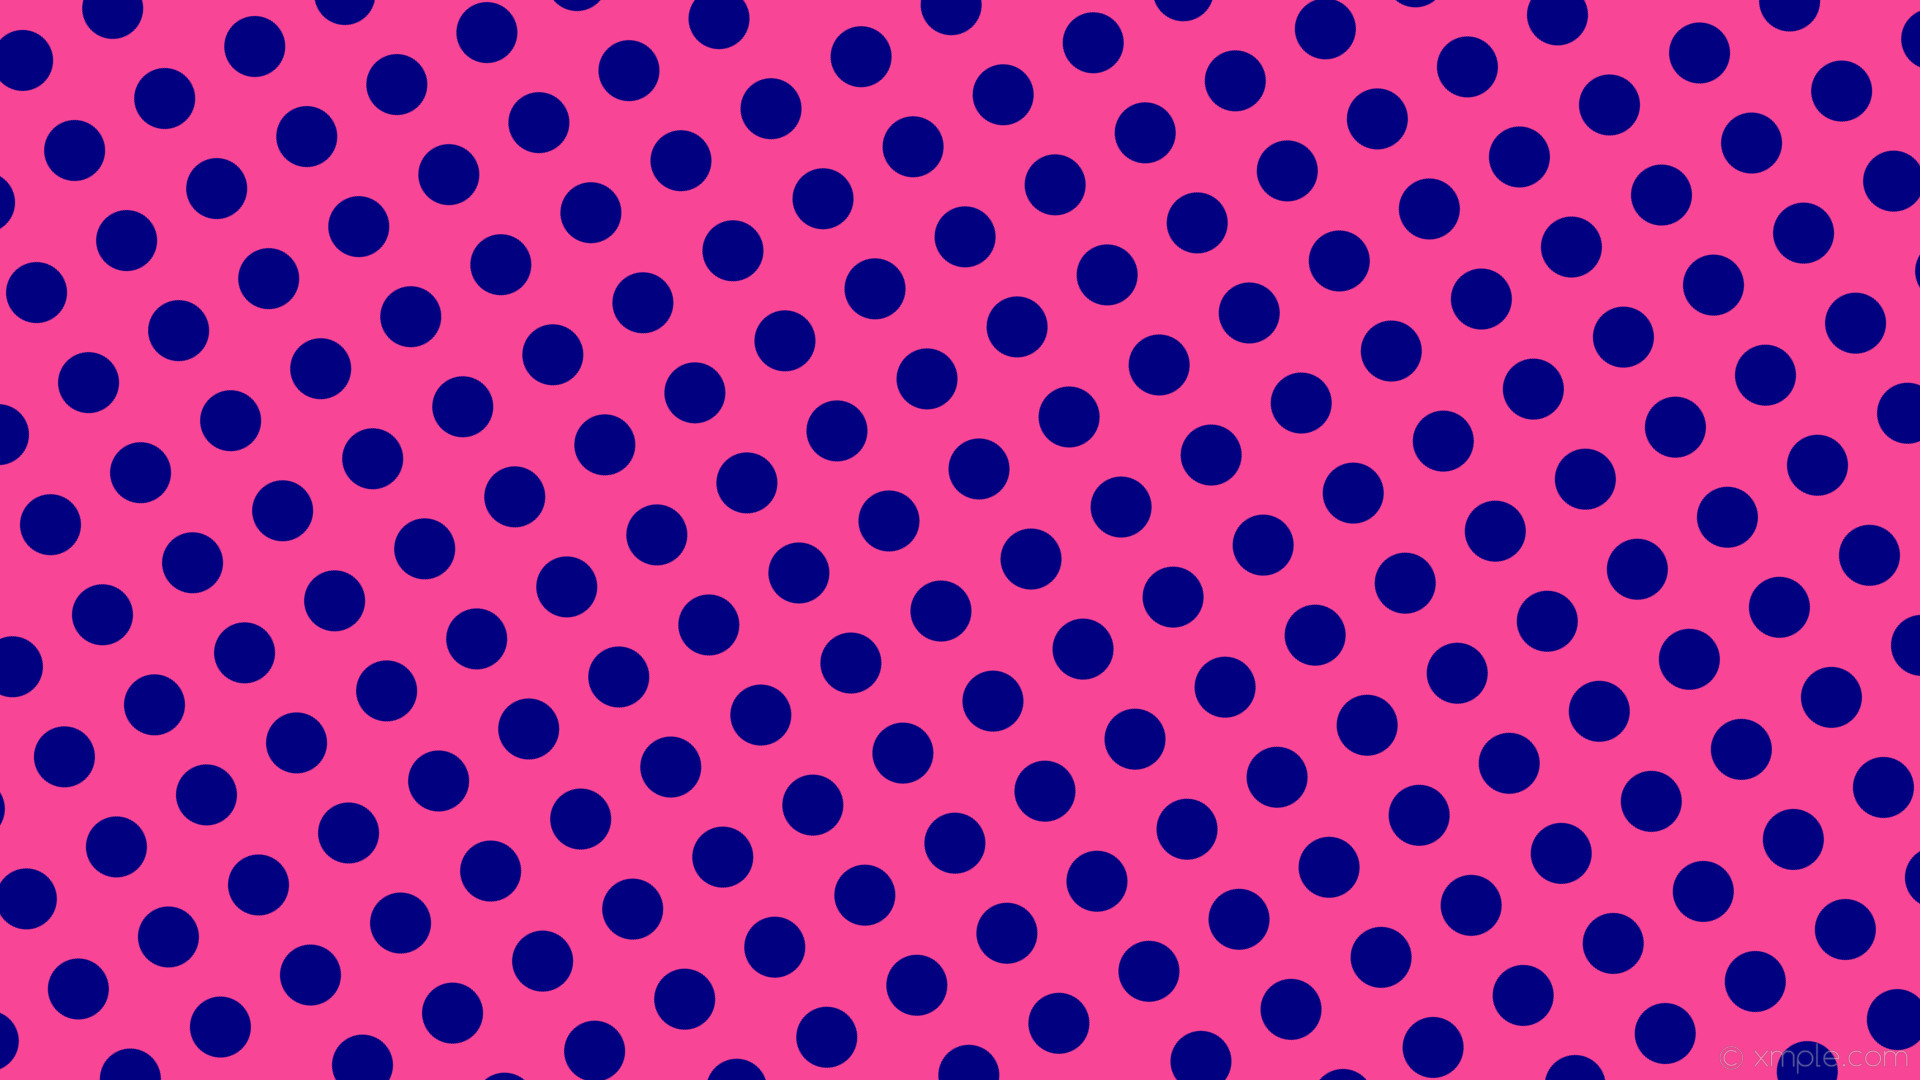 Wallpaper polka dots spots blue pink navy #f84595 120 61px 104px